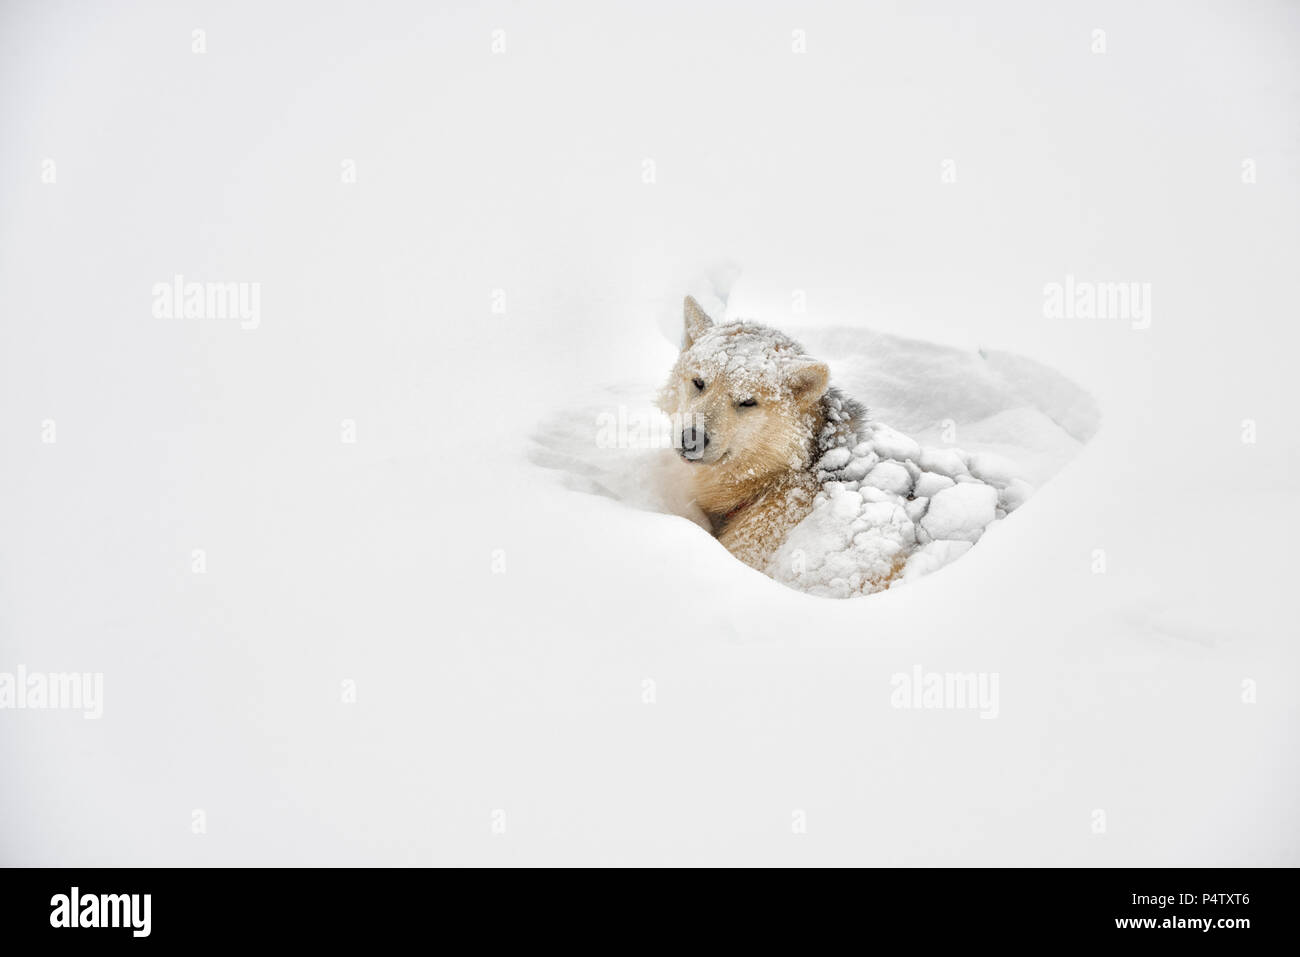 Greenland, husky lying in snow Stock Photo